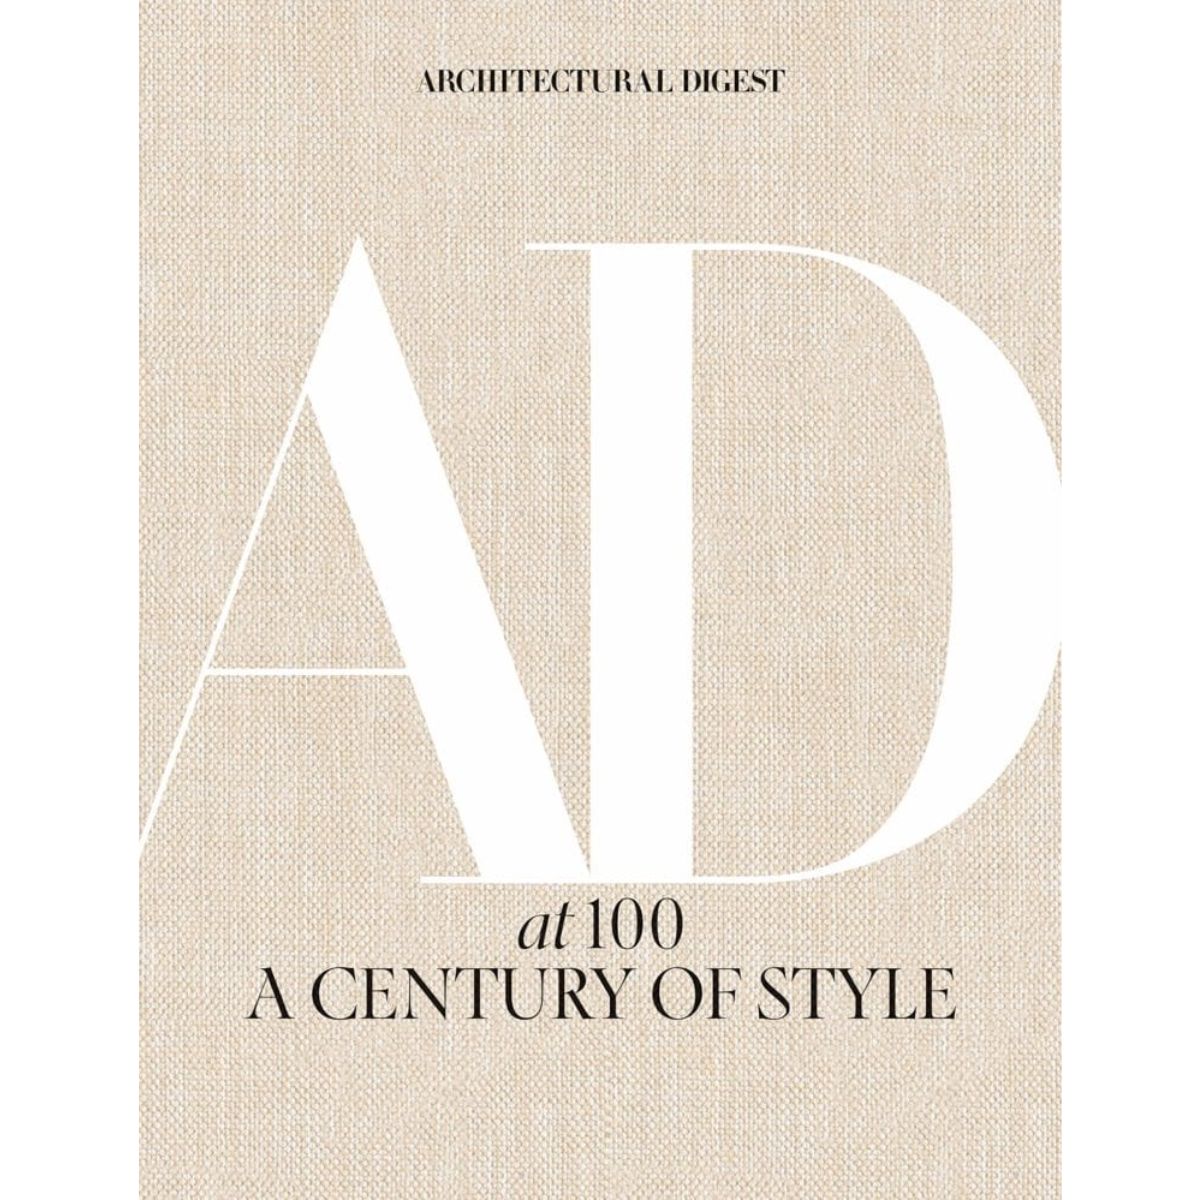 Hintsdeco Books Βιβλίο Τέχνης Βιβλίο Τέχνης Architectural Digest at 100: A Century of Style Μπεζ Λινό 27×4,0×34 cm Hintsdeco